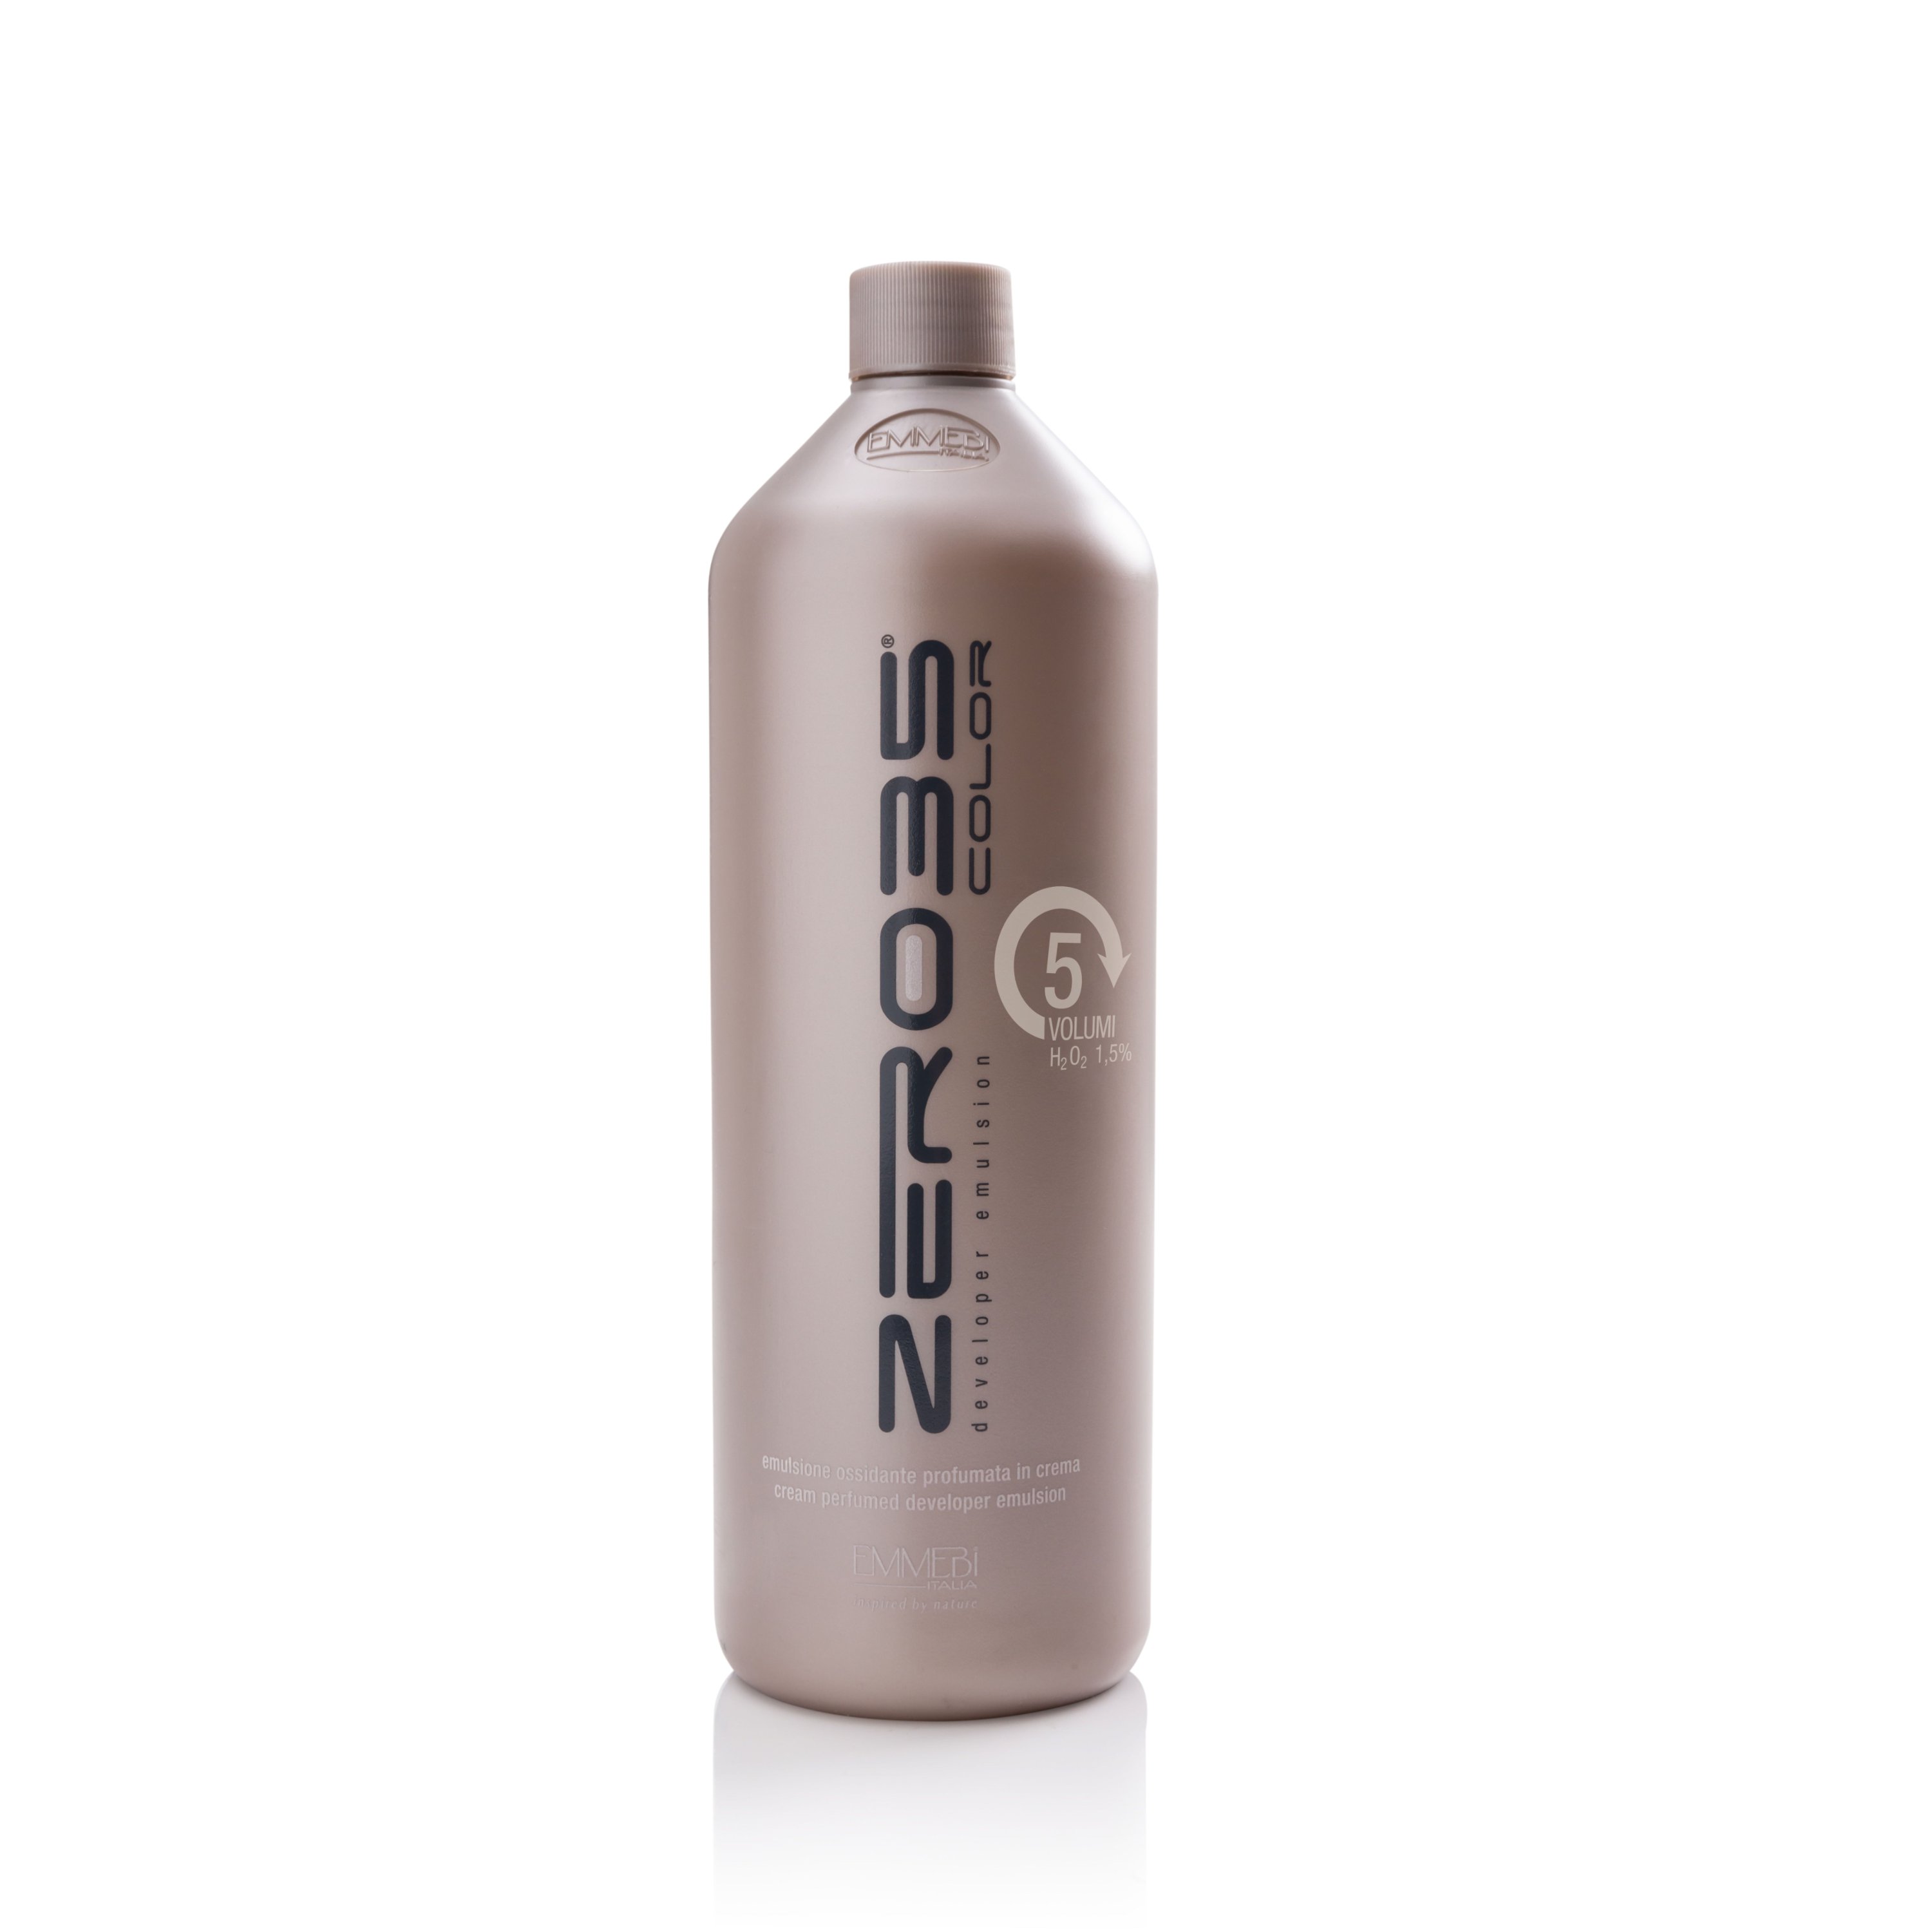 Крем-оксидант емульсійний Zer035 perfum developer emulsion, 1000ml